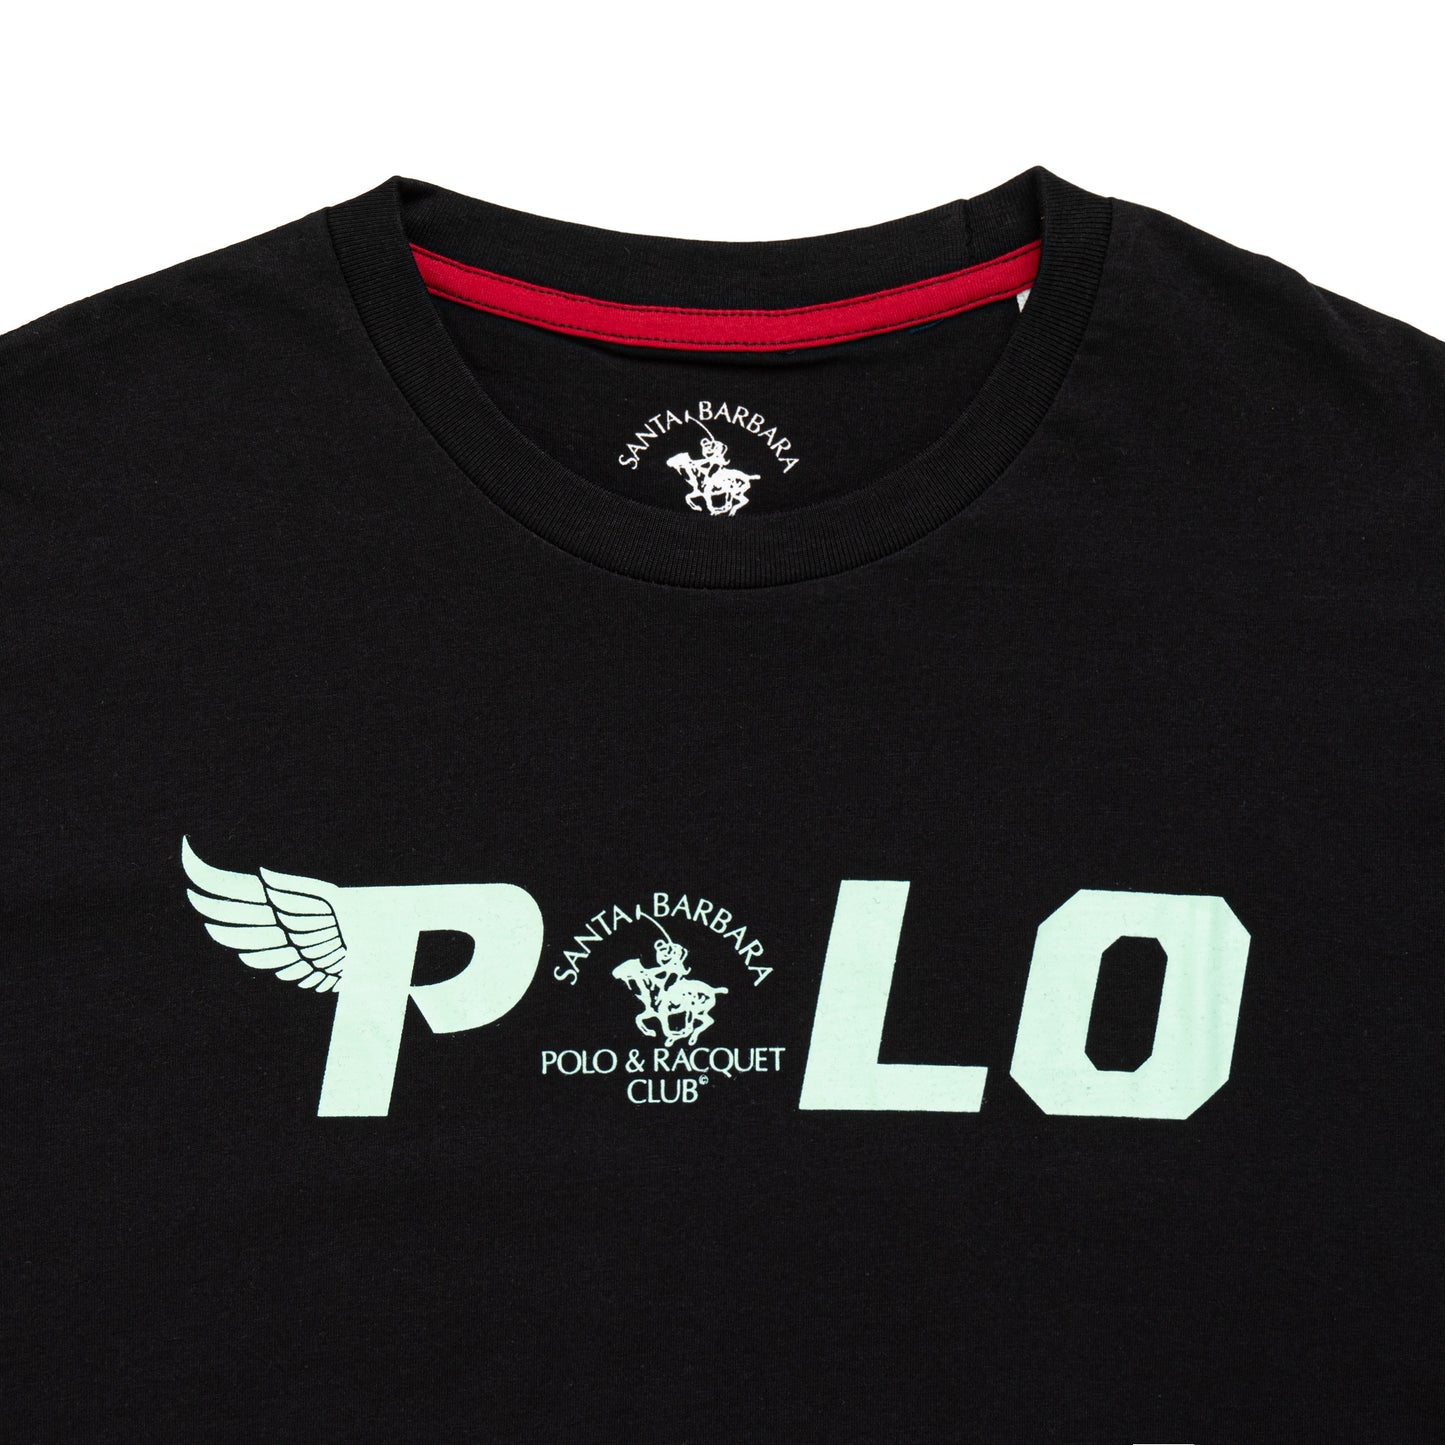 Santa Barbara Polo & Racquet Club Men's Graphic T-shirt - Racing Collection Glow In the Dark